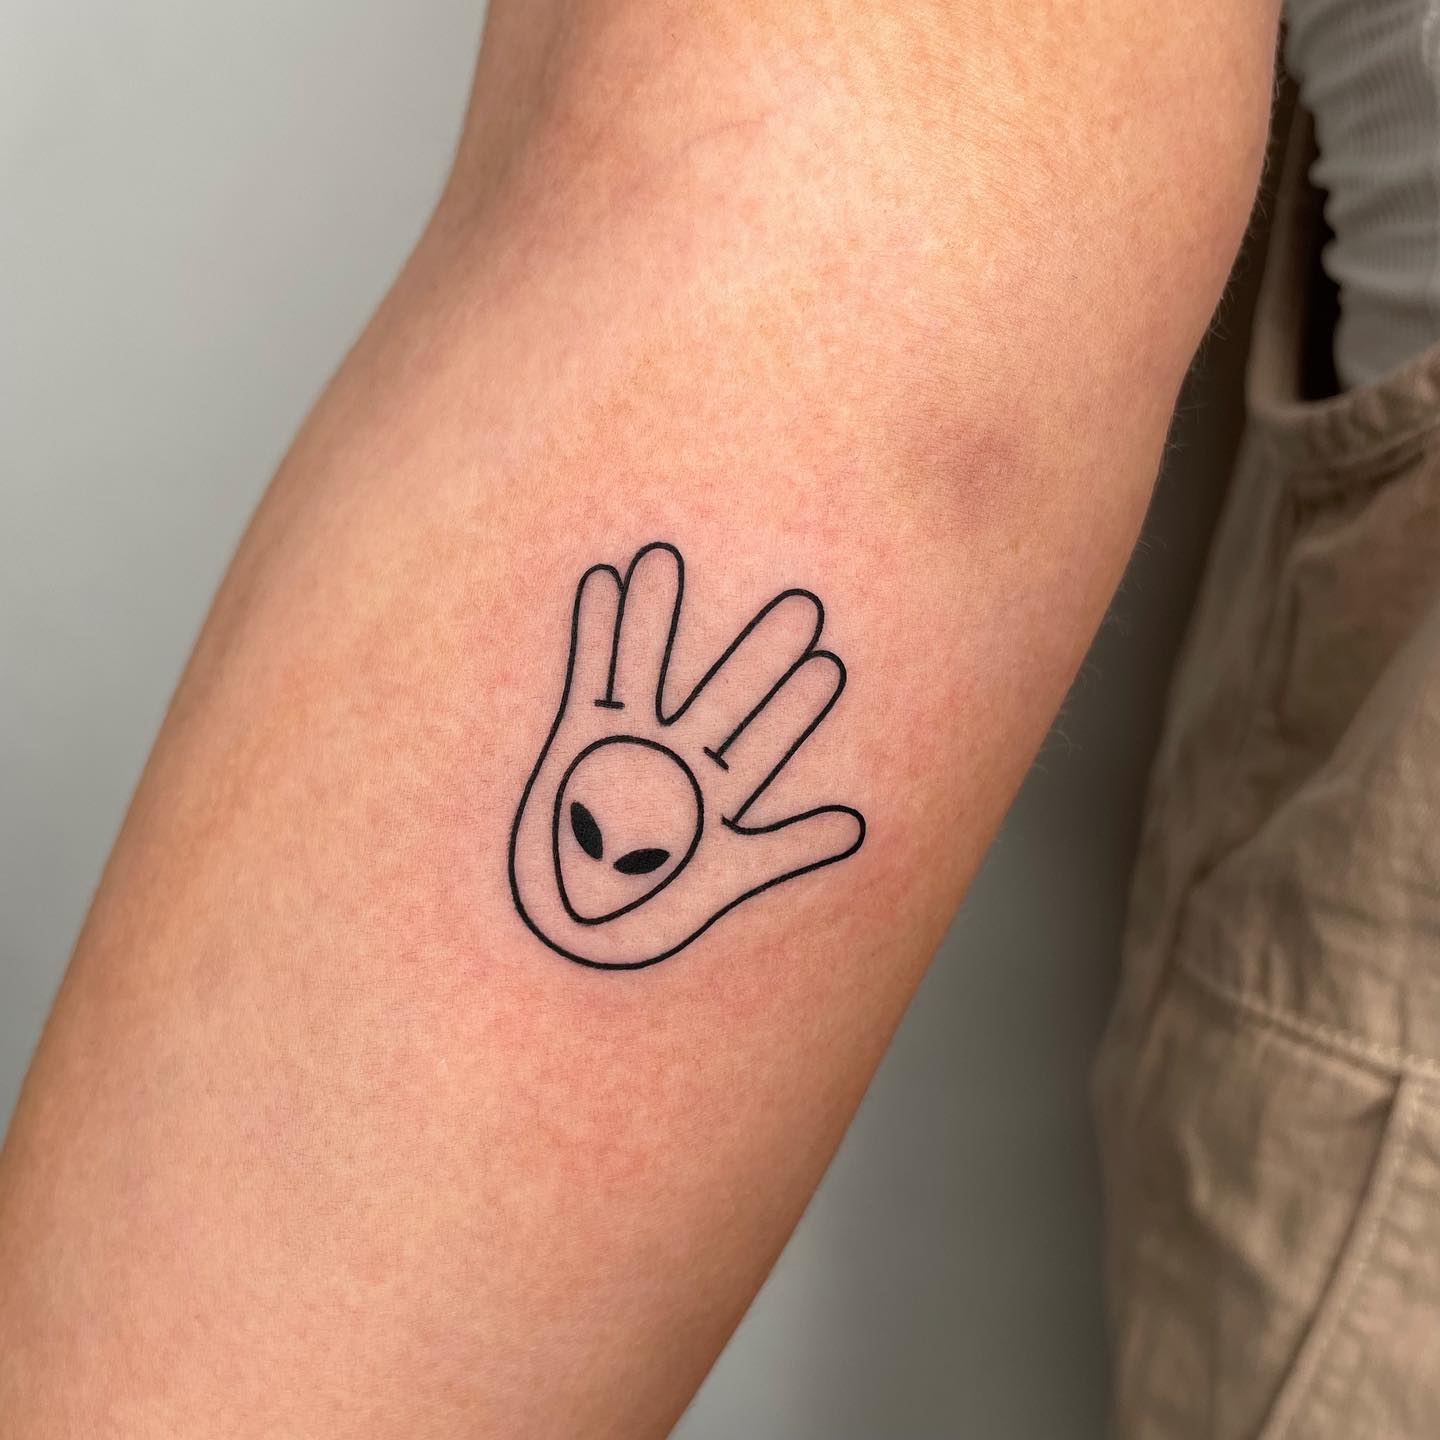 alien tattoos for women by nancydestroyer